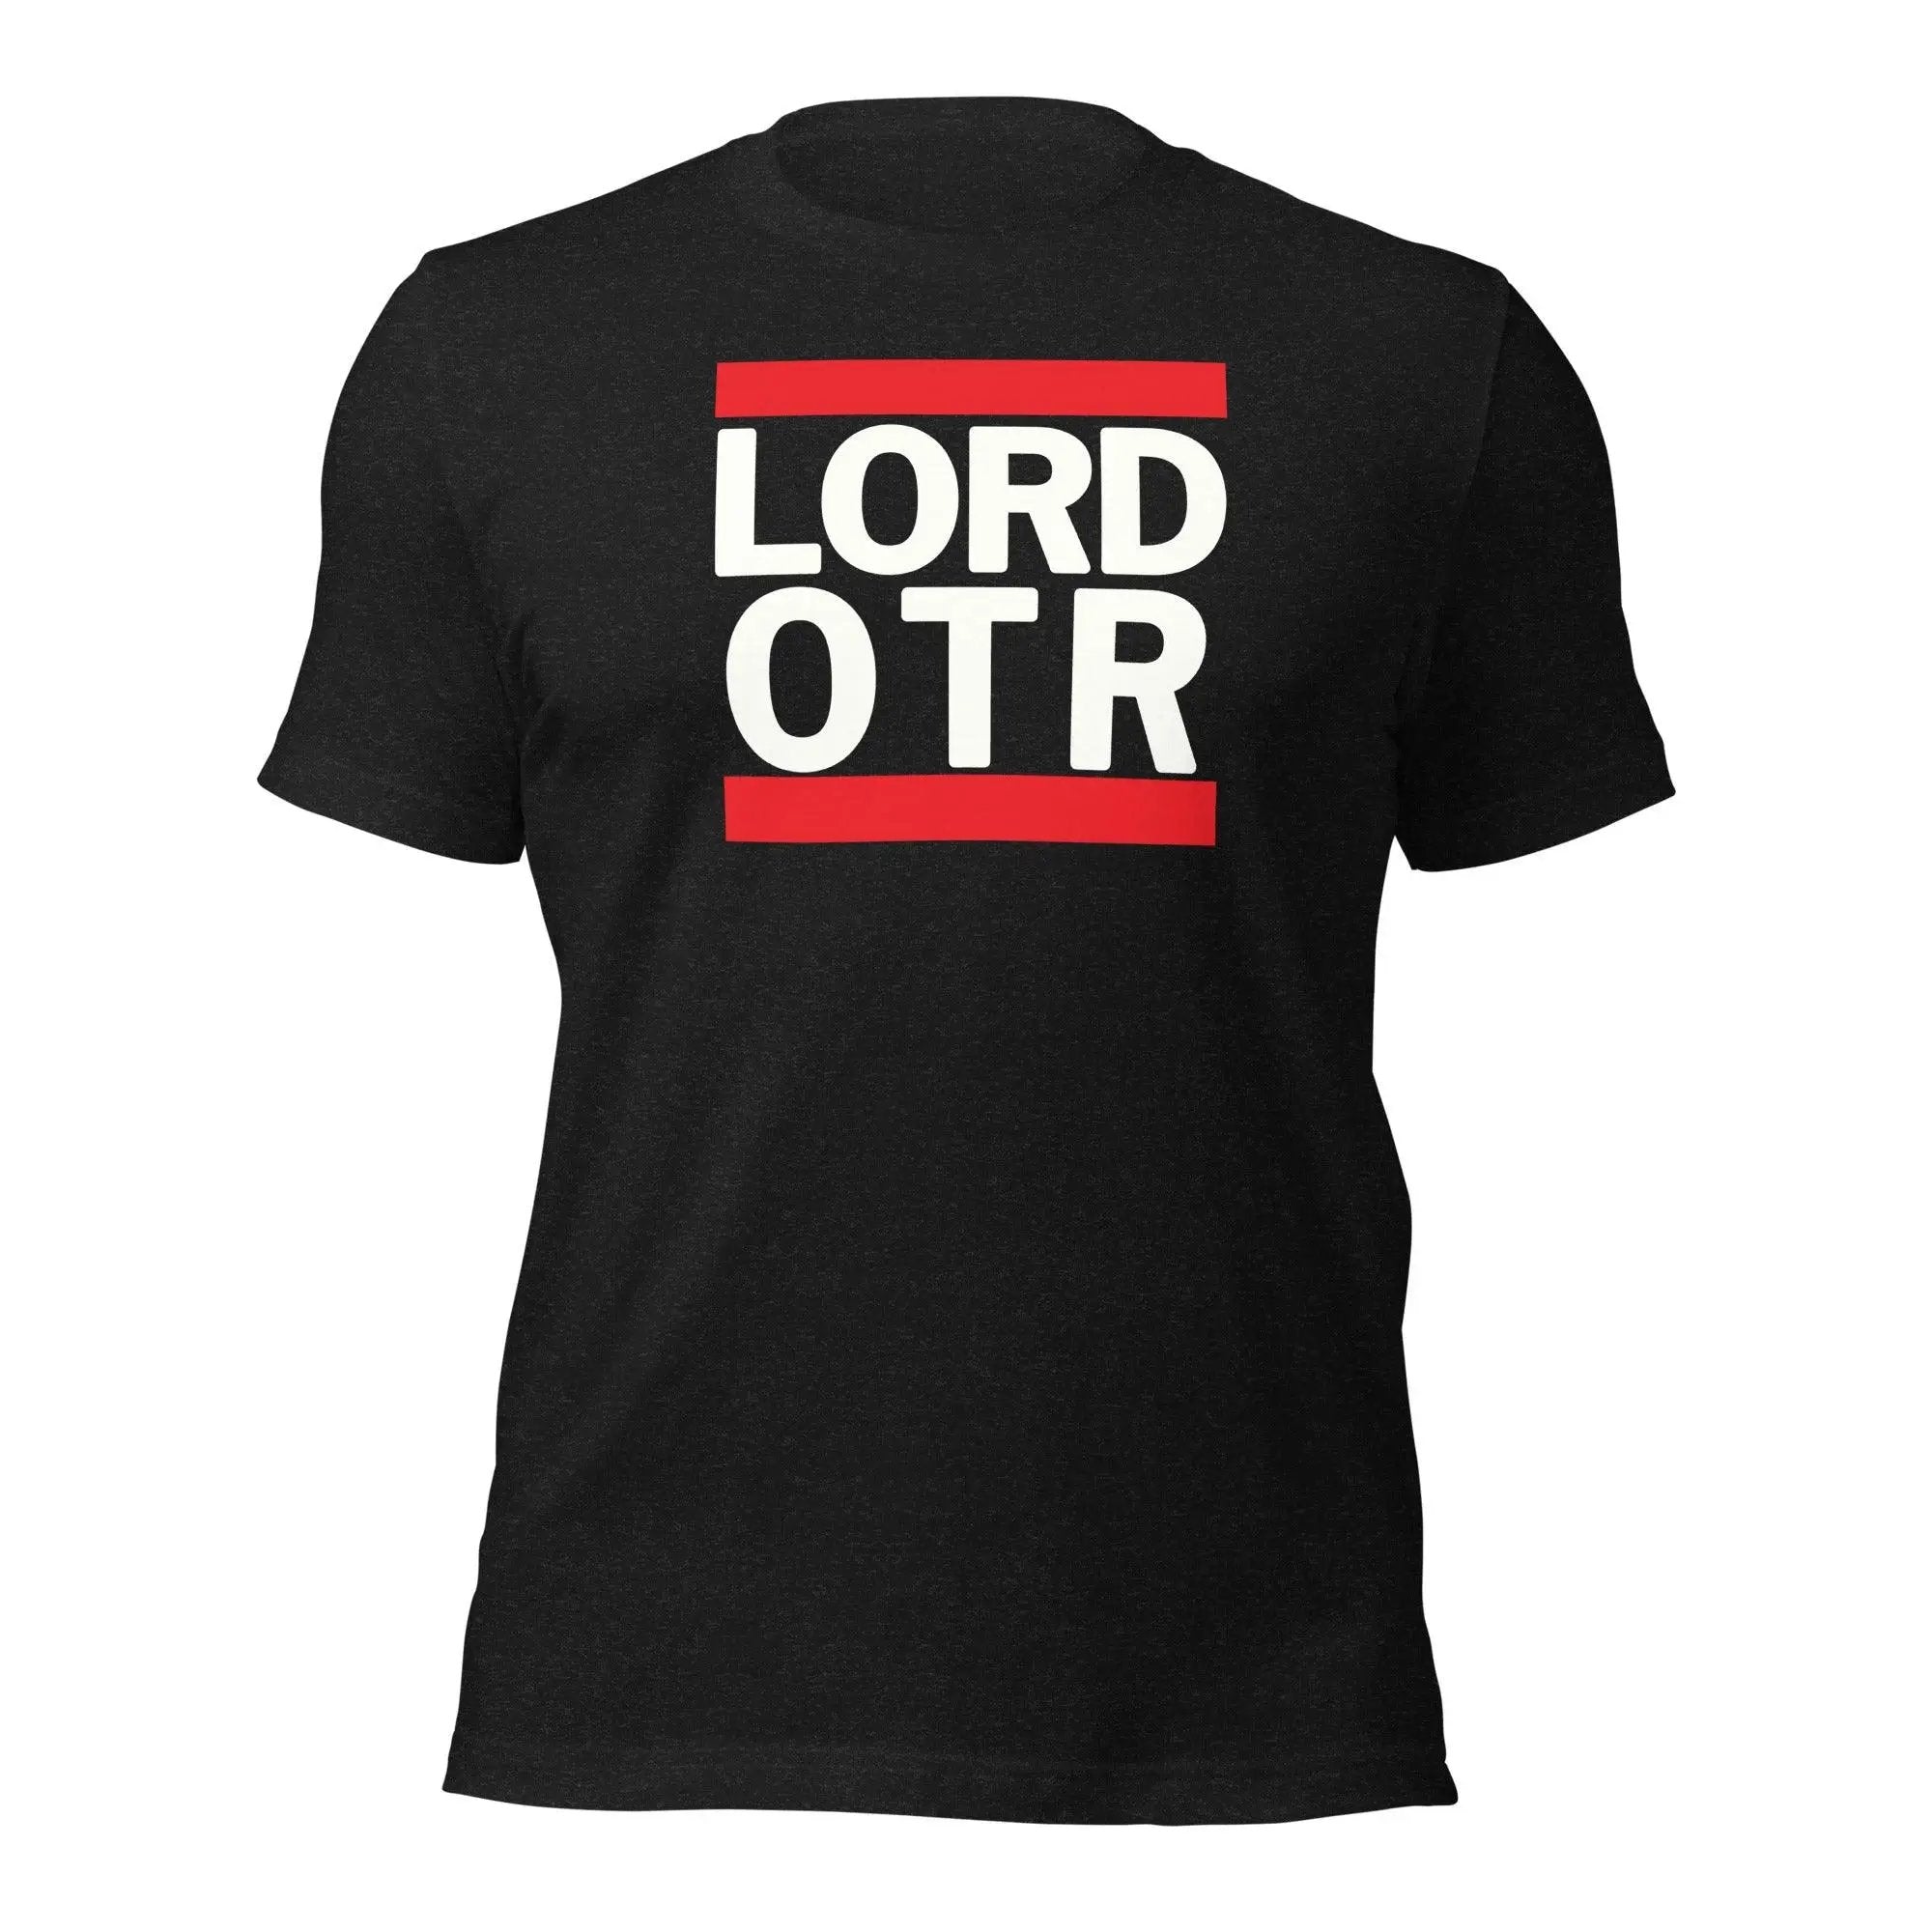 Lord OTR/DMC Unisex t-shirt